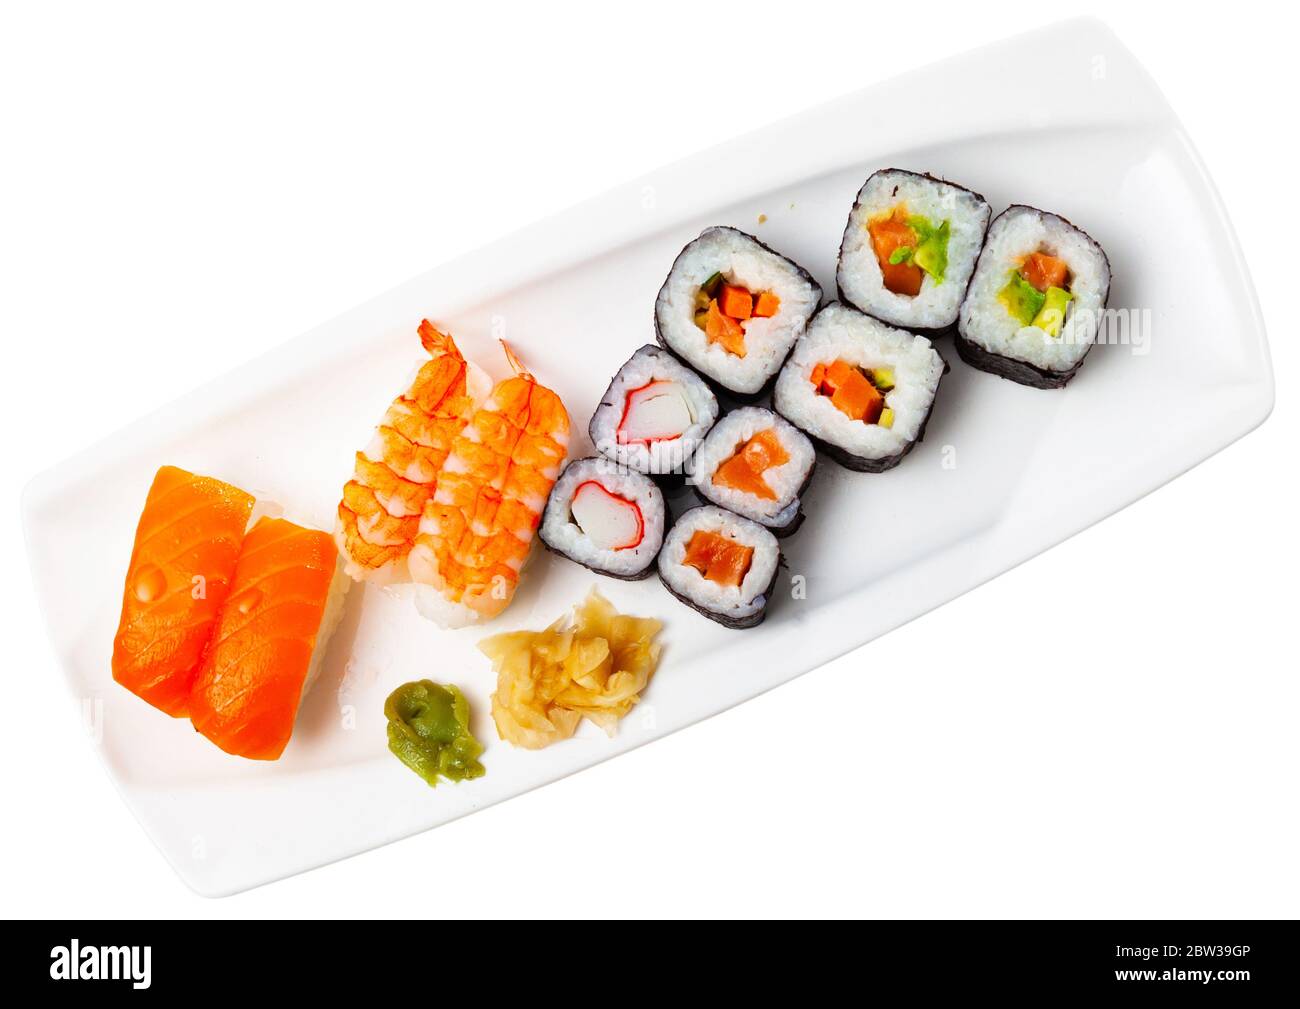 https://c8.alamy.com/comp/2BW39GP/traditional-japanese-sushi-platter-hosomaki-and-makizushi-with-various-fillings-nigiri-with-salmon-and-shrimp-isolated-over-white-background-2BW39GP.jpg